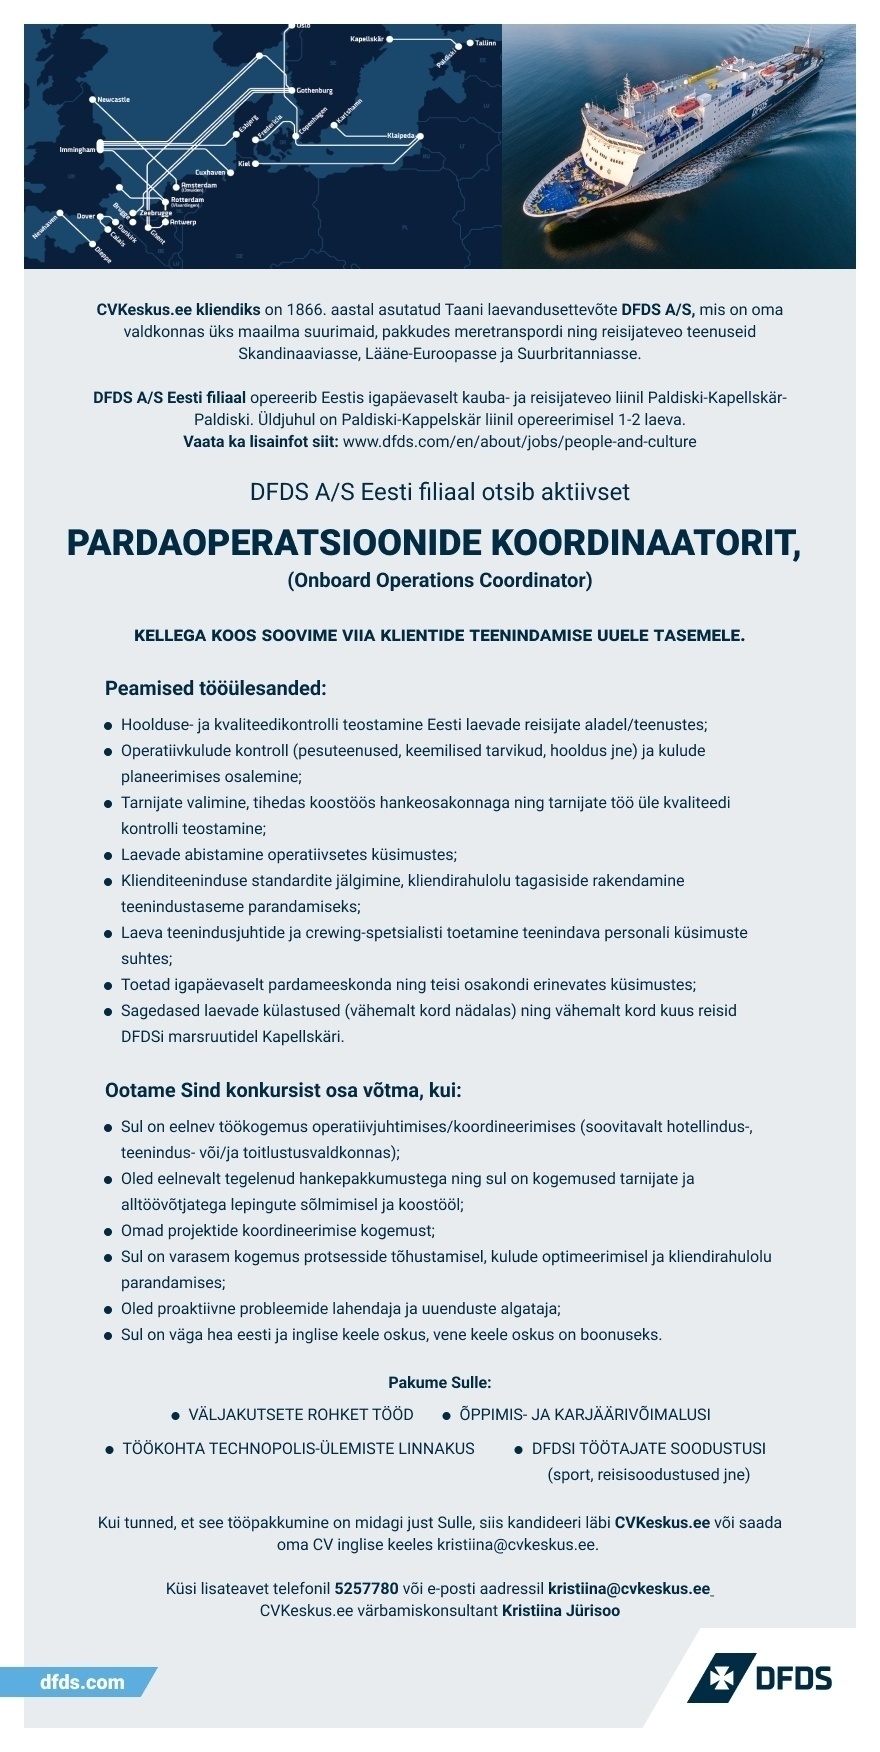 DFDS A/S Eesti filiaal  PARDAOPERATSIOONIDE KOORDINAATOR